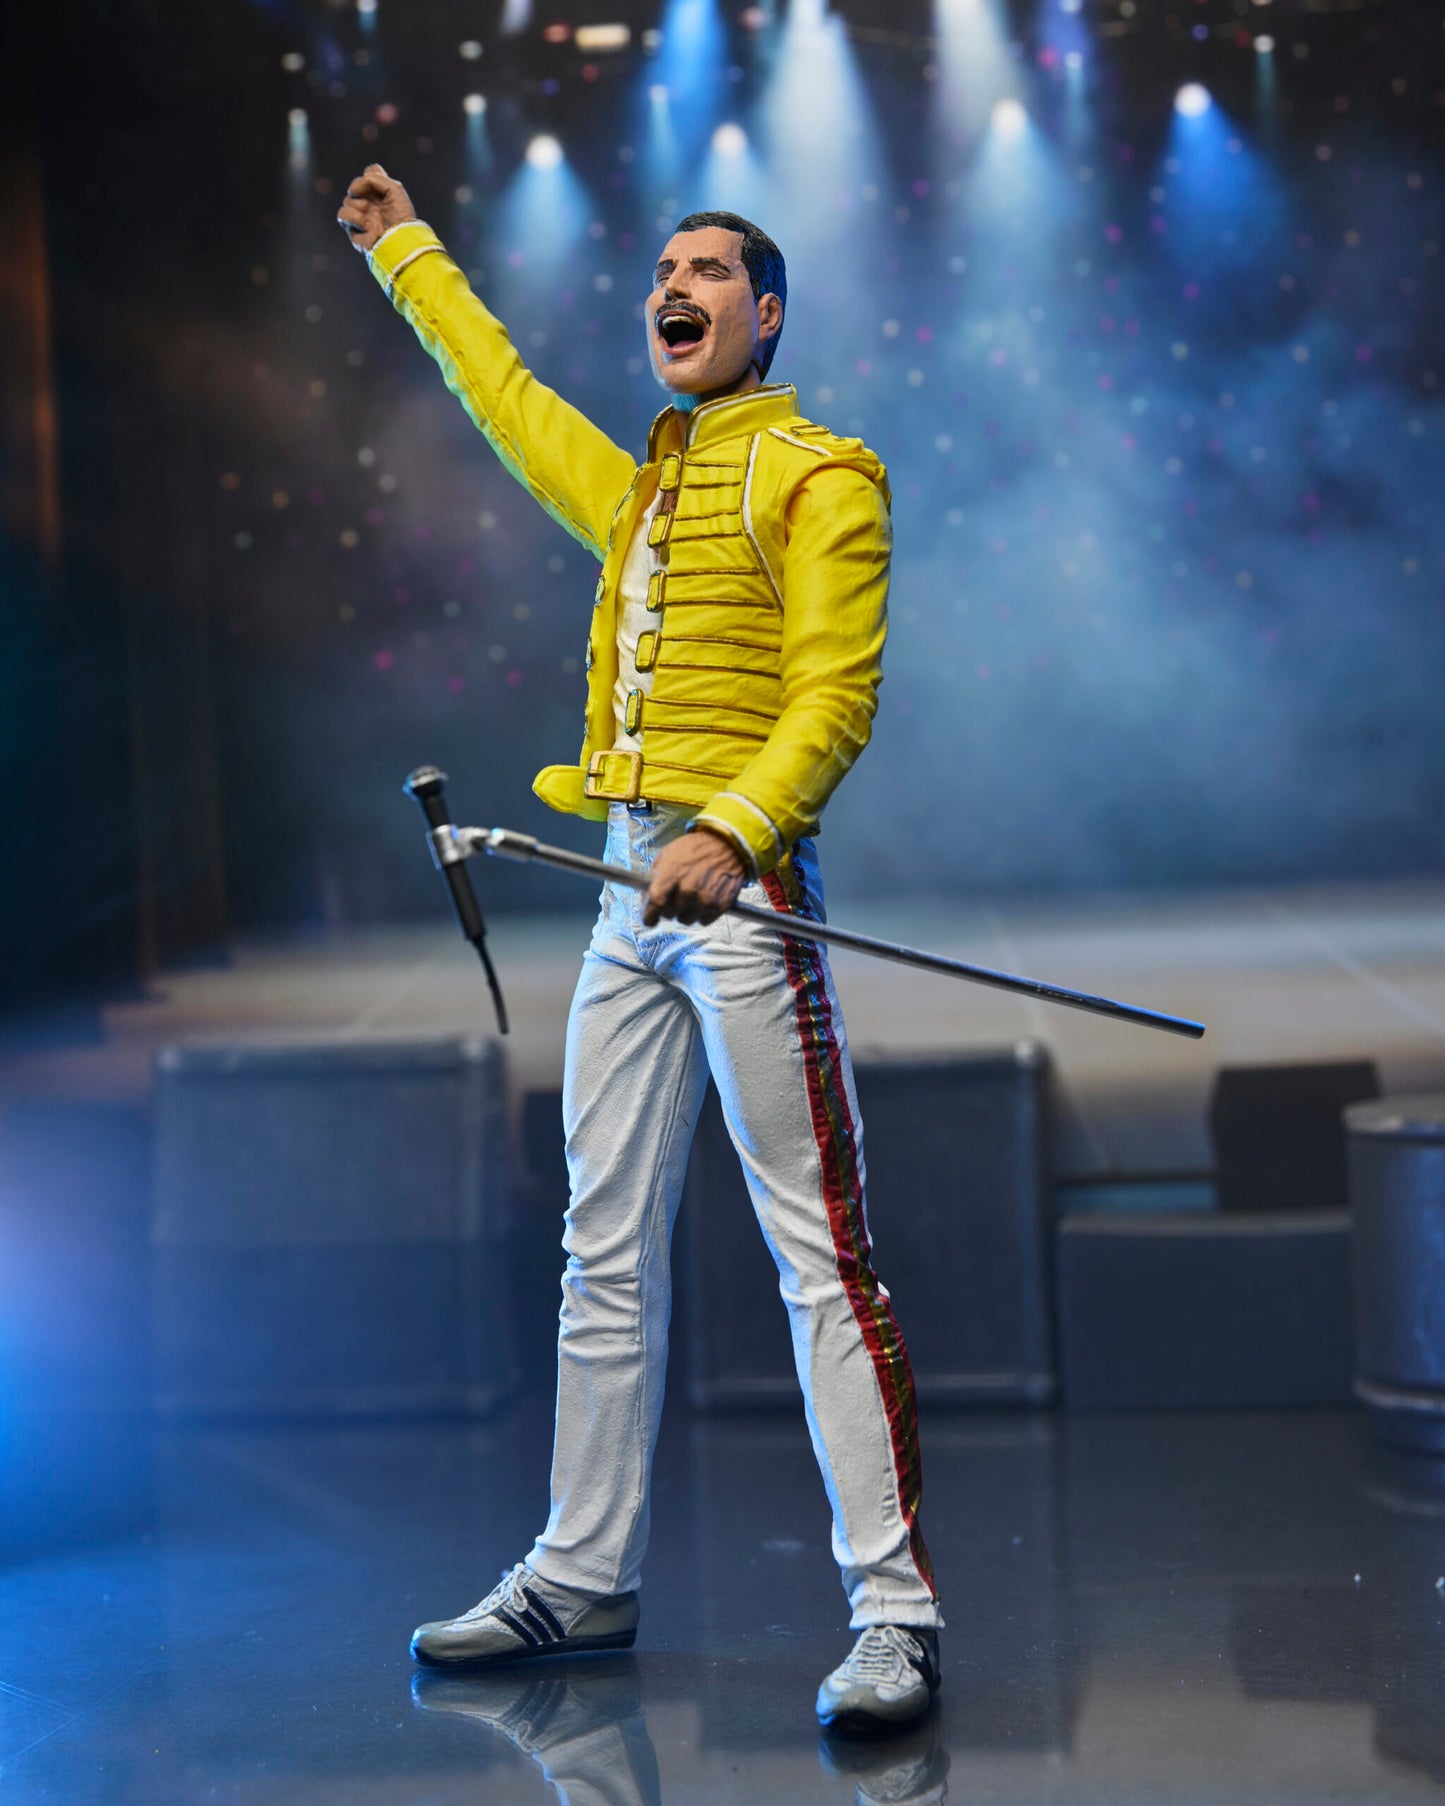 Freddie Mercury 7” Scale Action Figure – Yellow Jacket